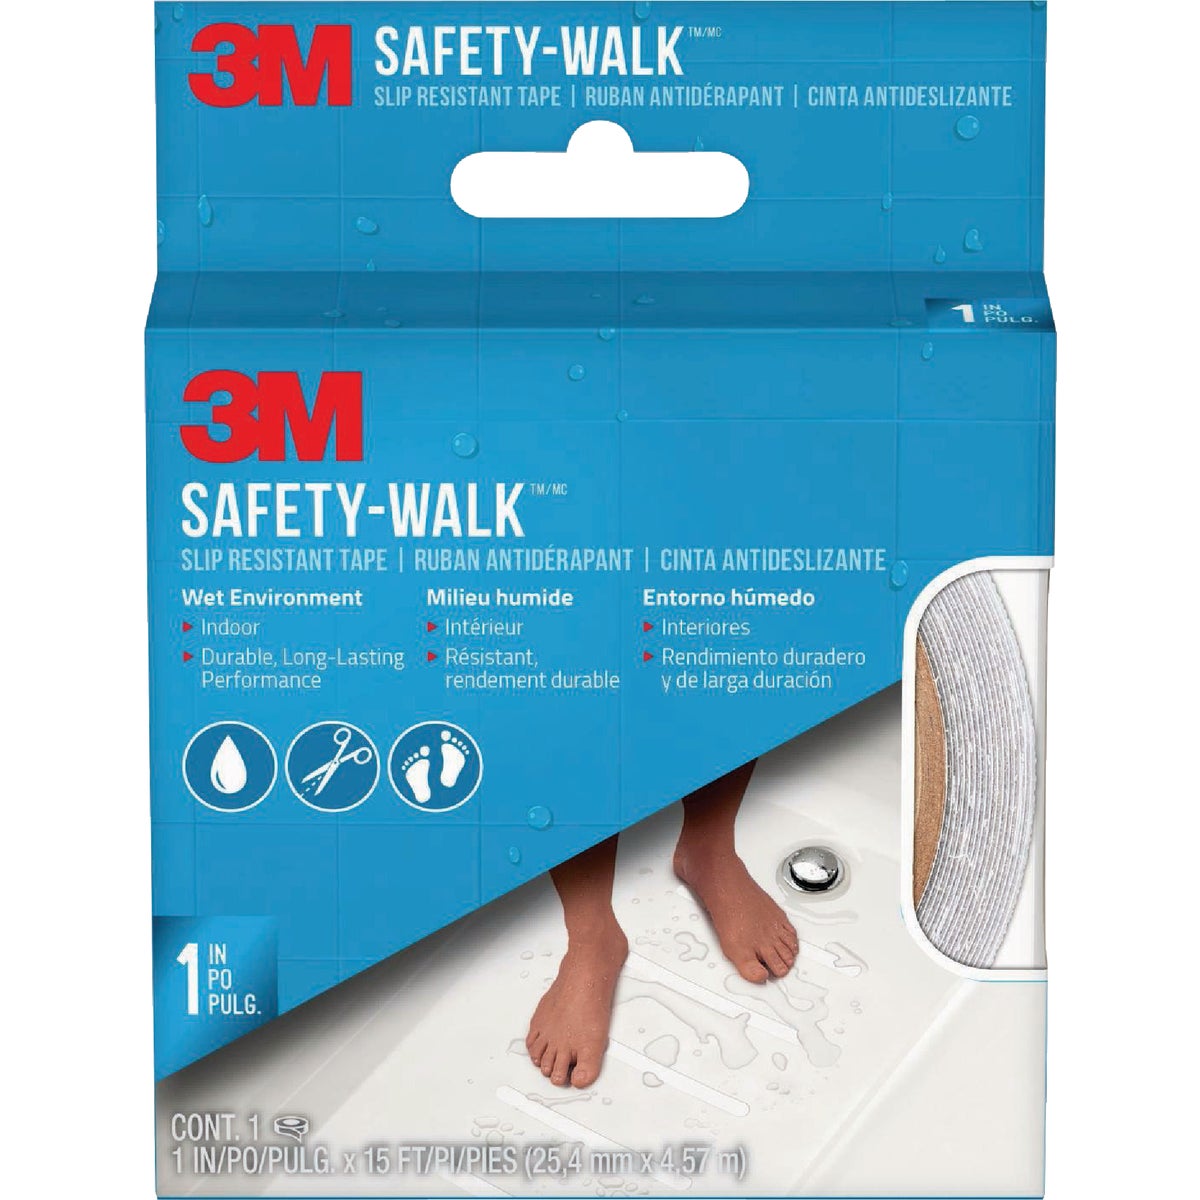 3M Safety-Walk 1 In. x 15 Ft. White Slip Resistant Tape